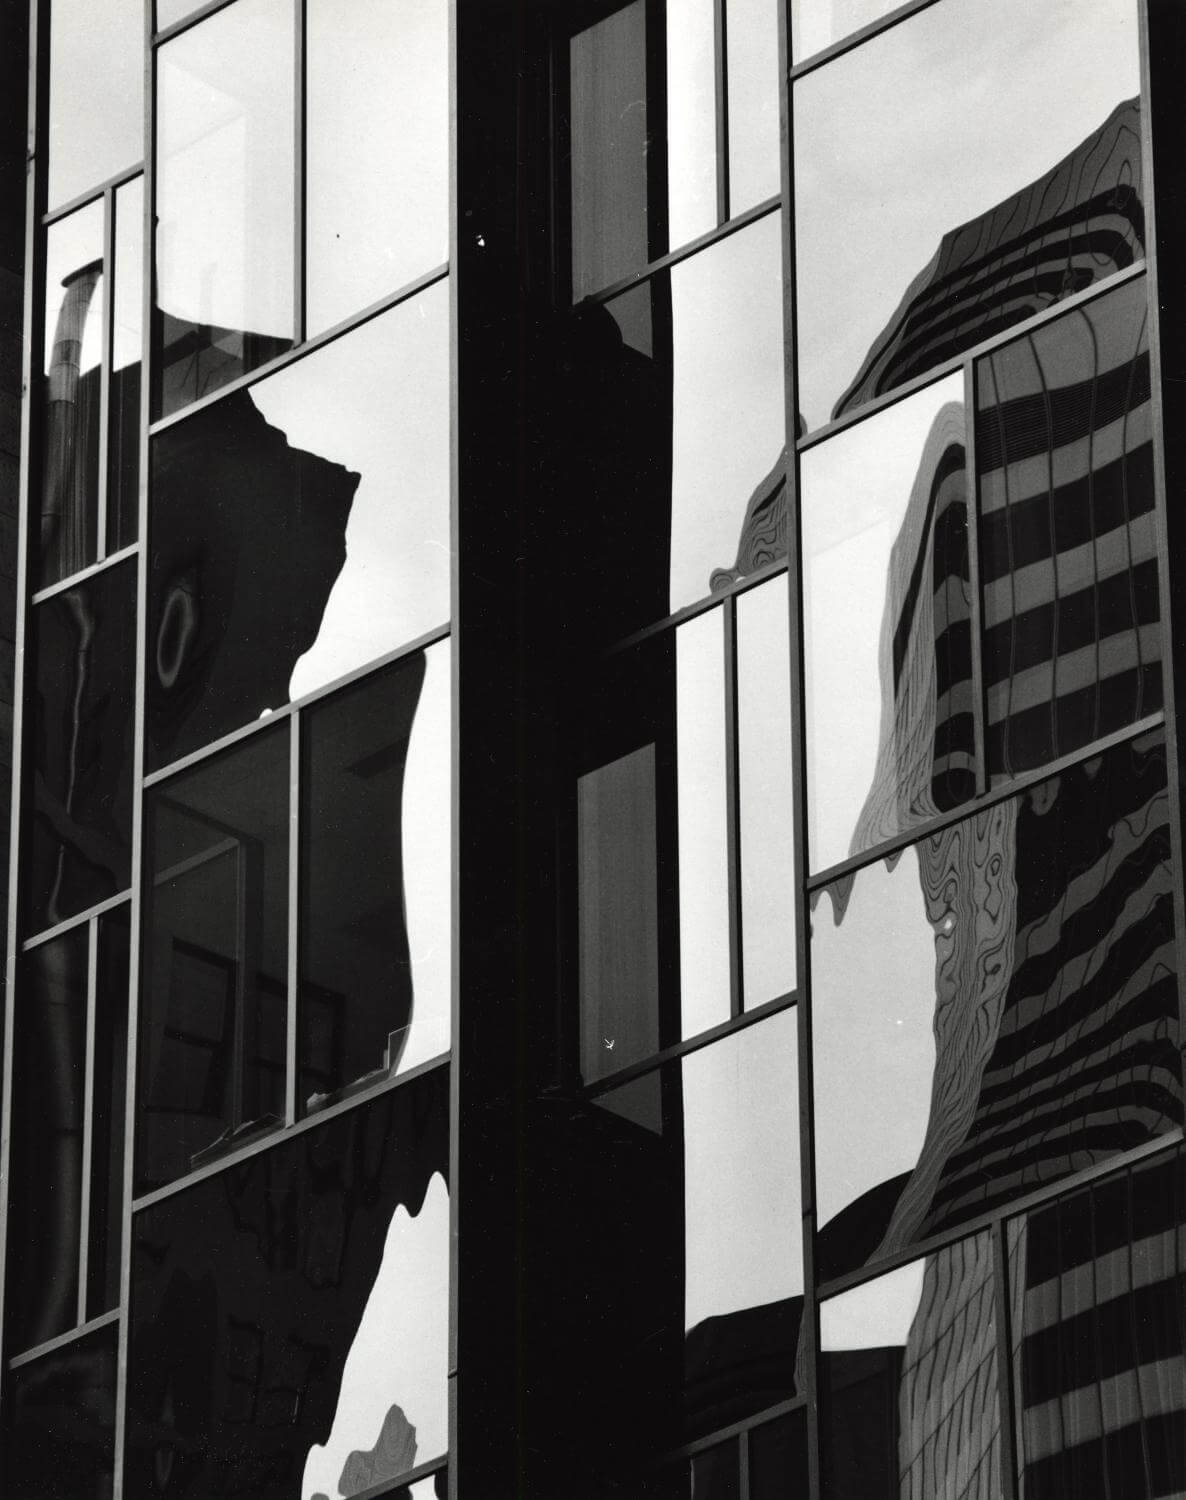 "Building" by Brett Weston